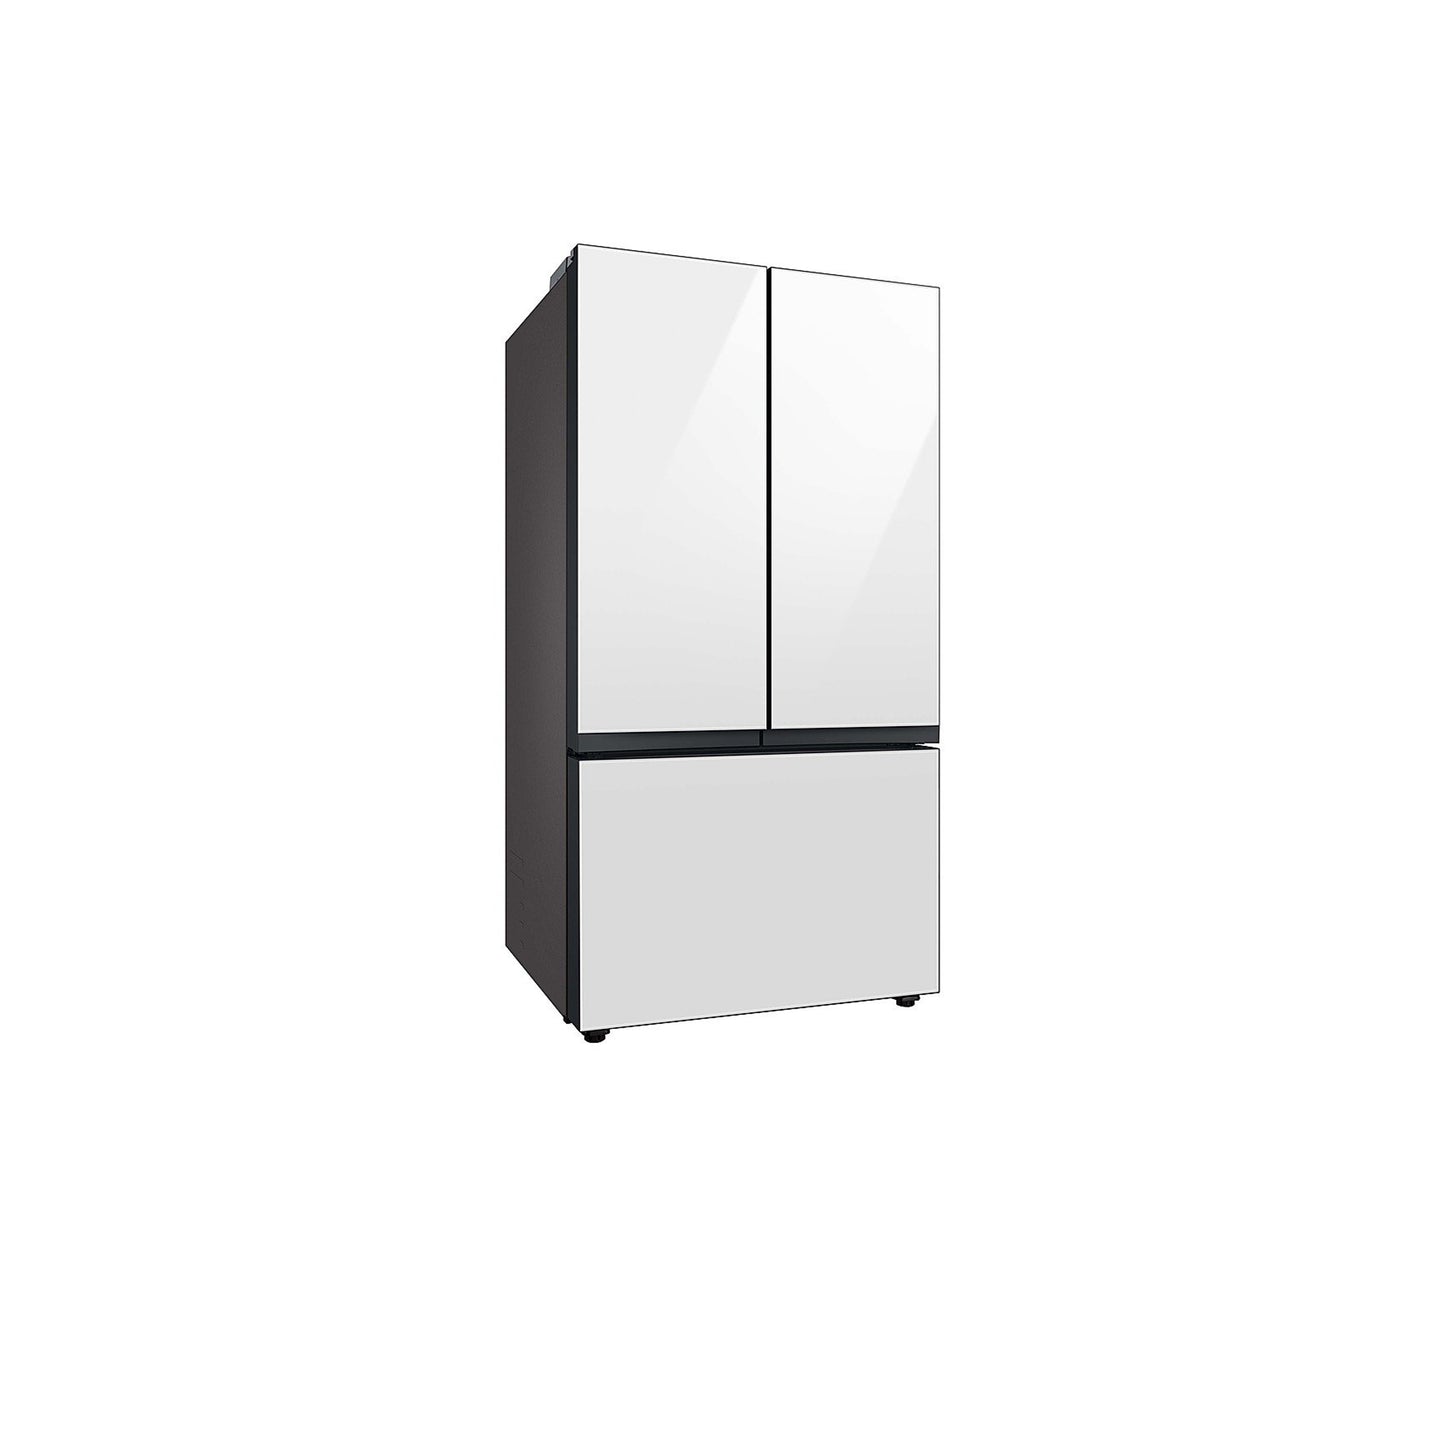 Bespoke 3-Door French Door Refrigerator (30 cu. ft.) with AutoFill Water Pitcher in Stainless Steel